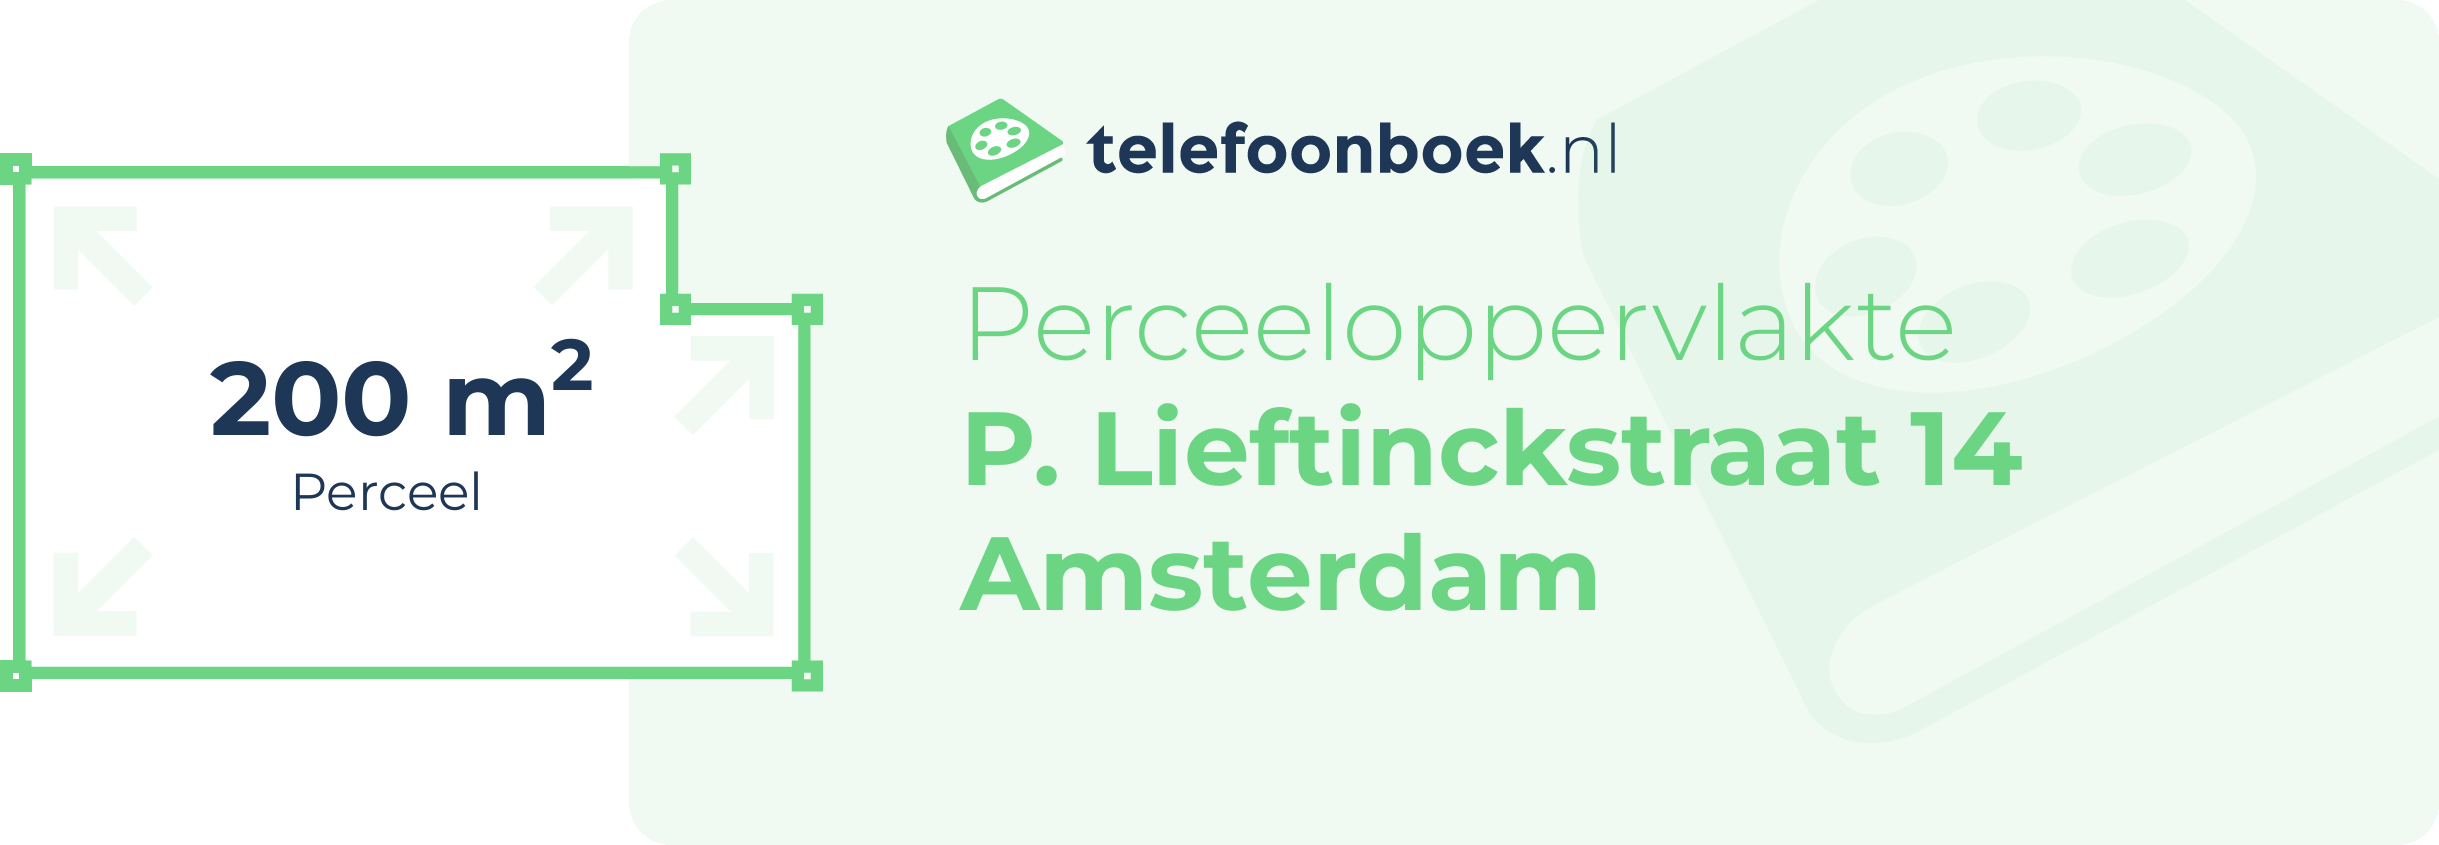 Perceeloppervlakte P. Lieftinckstraat 14 Amsterdam